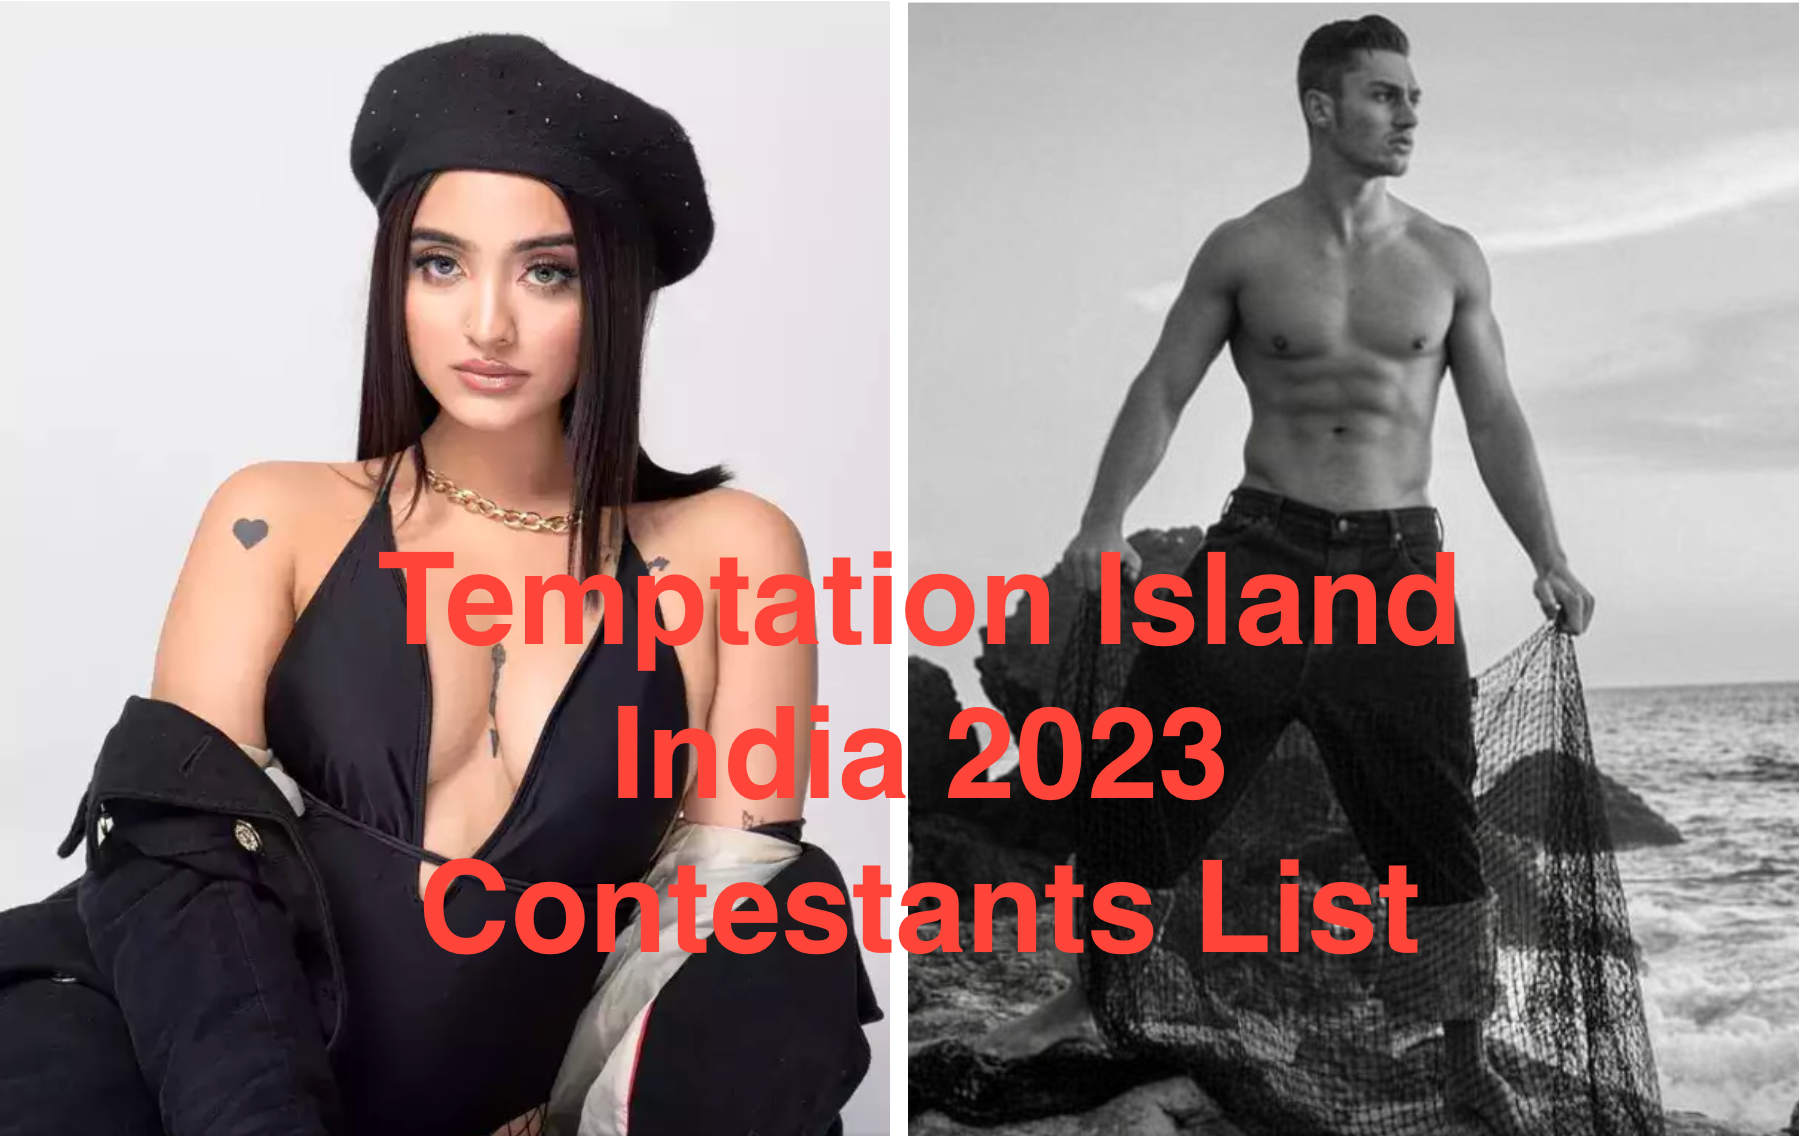 Temptation Island India 2023 Contestants List with Photos (updated) - SAB TV